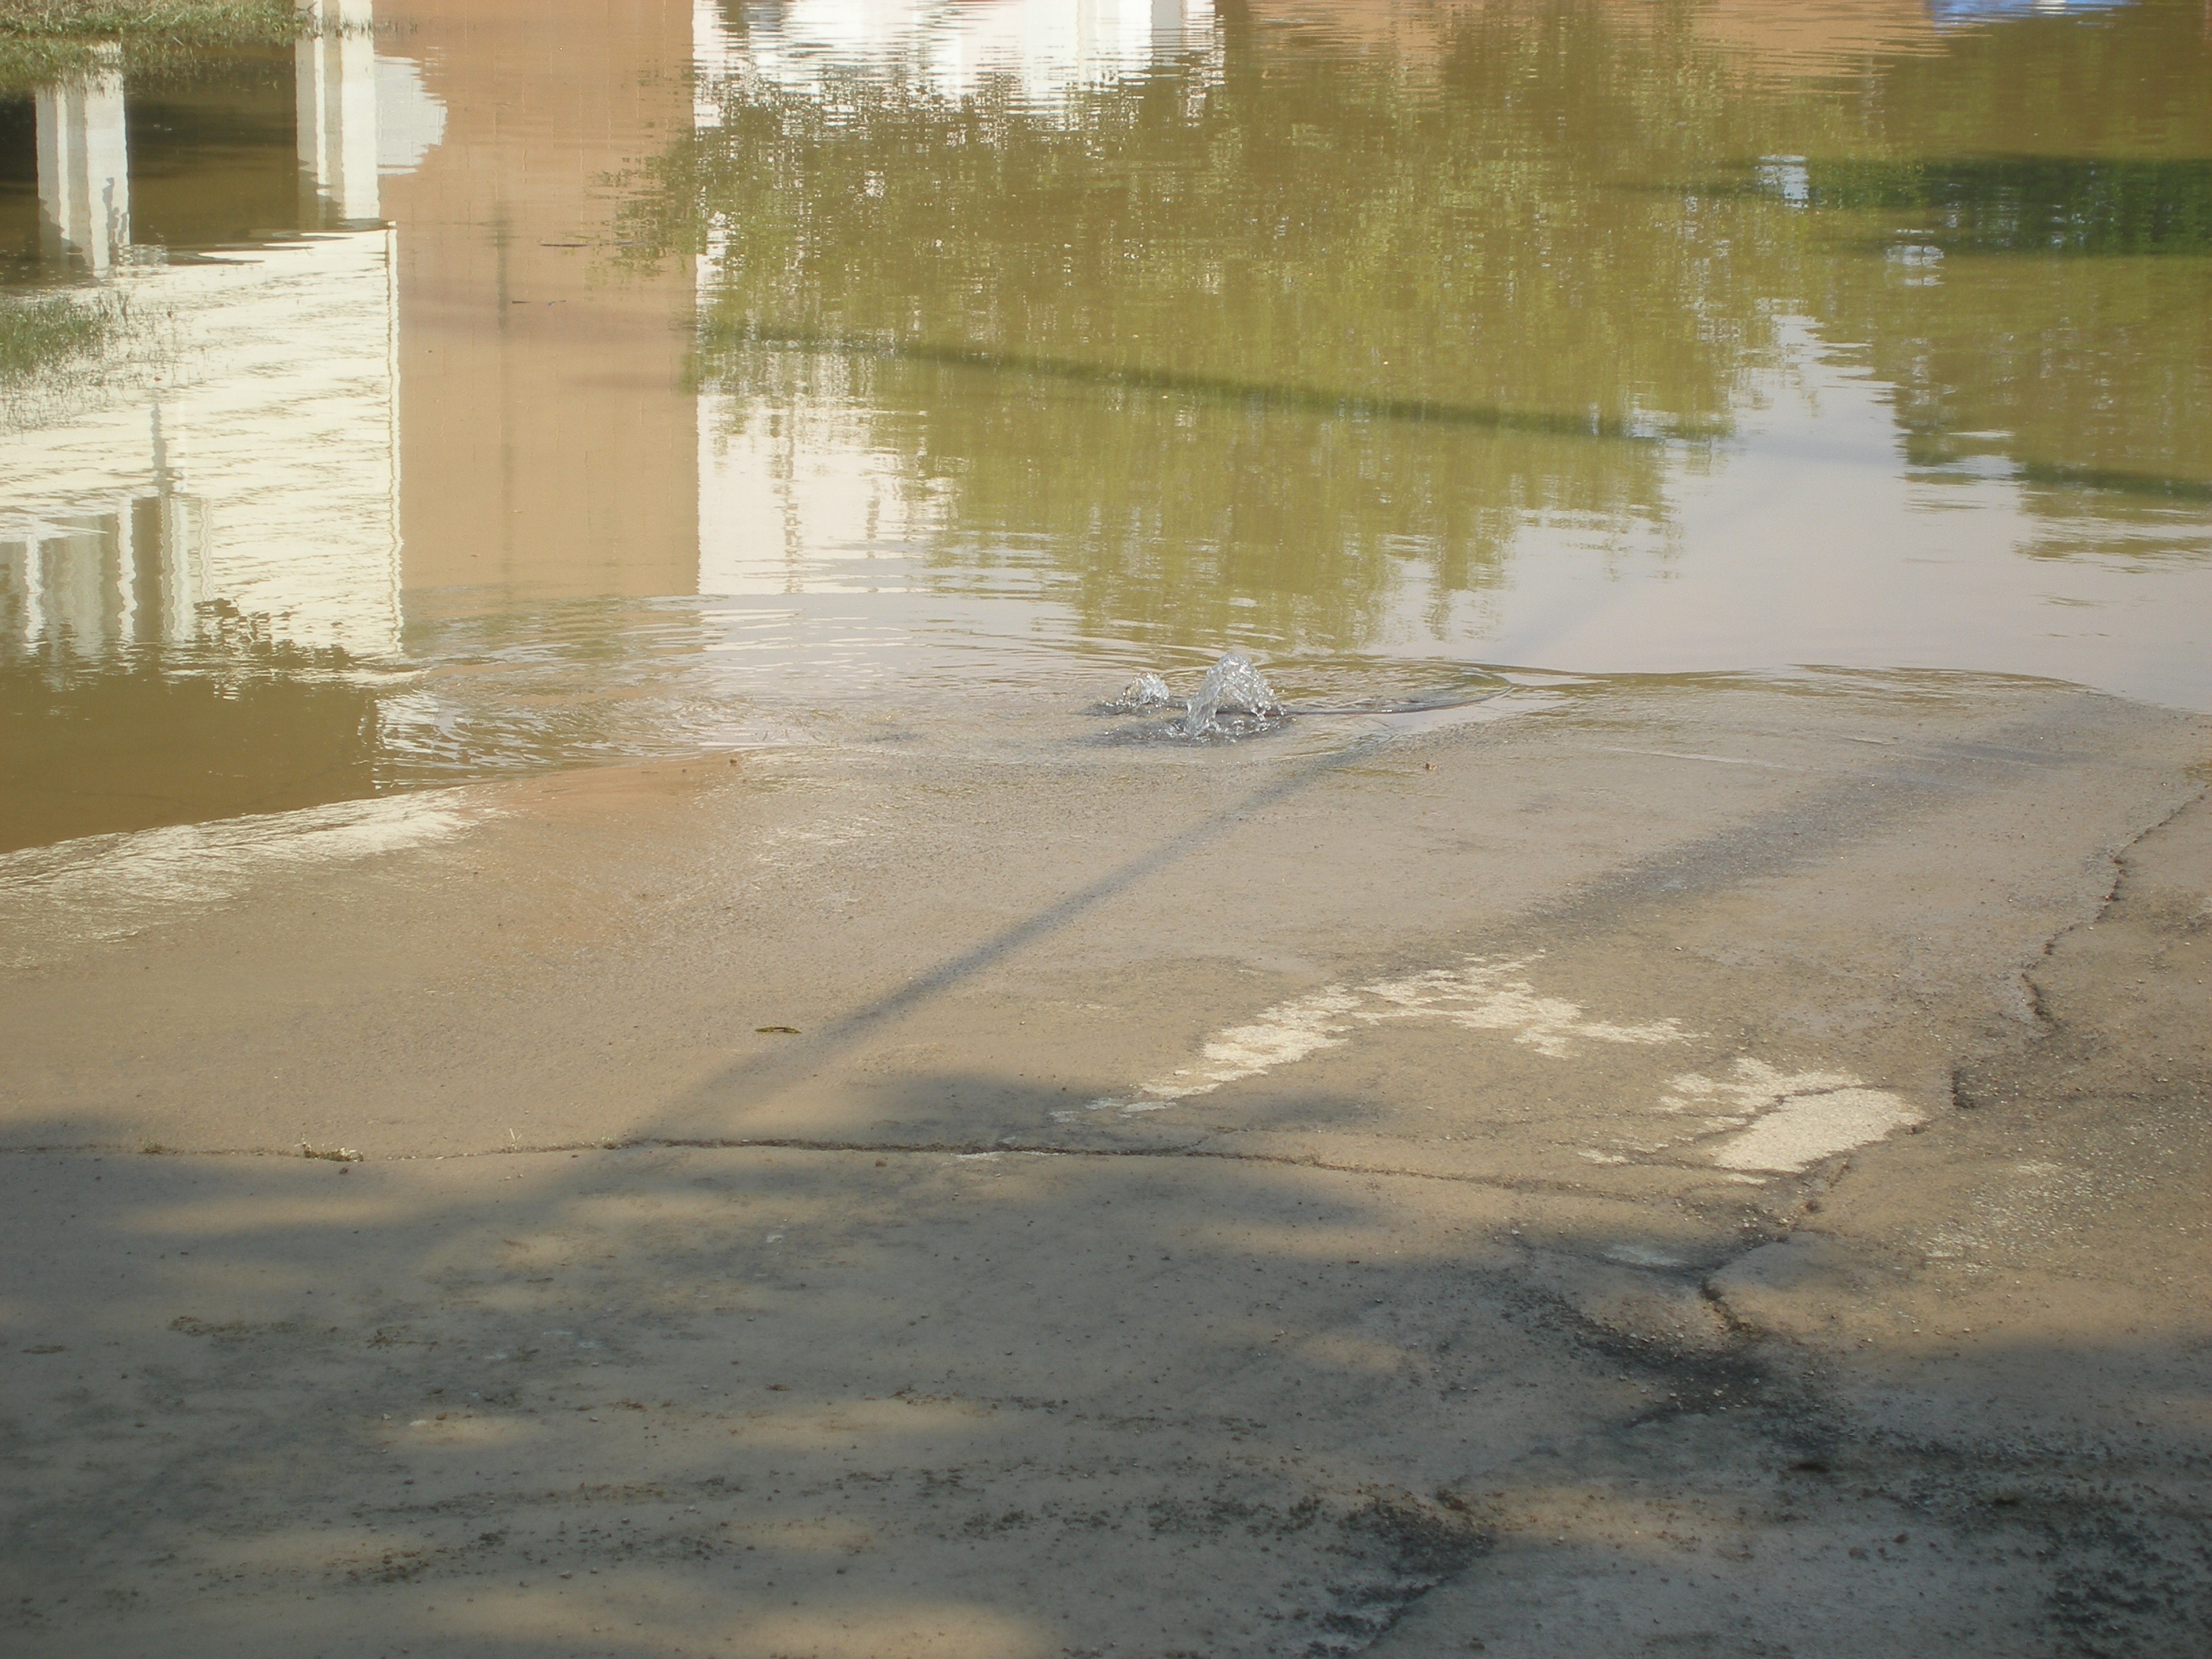 06-30-06  Reponse - Flooding